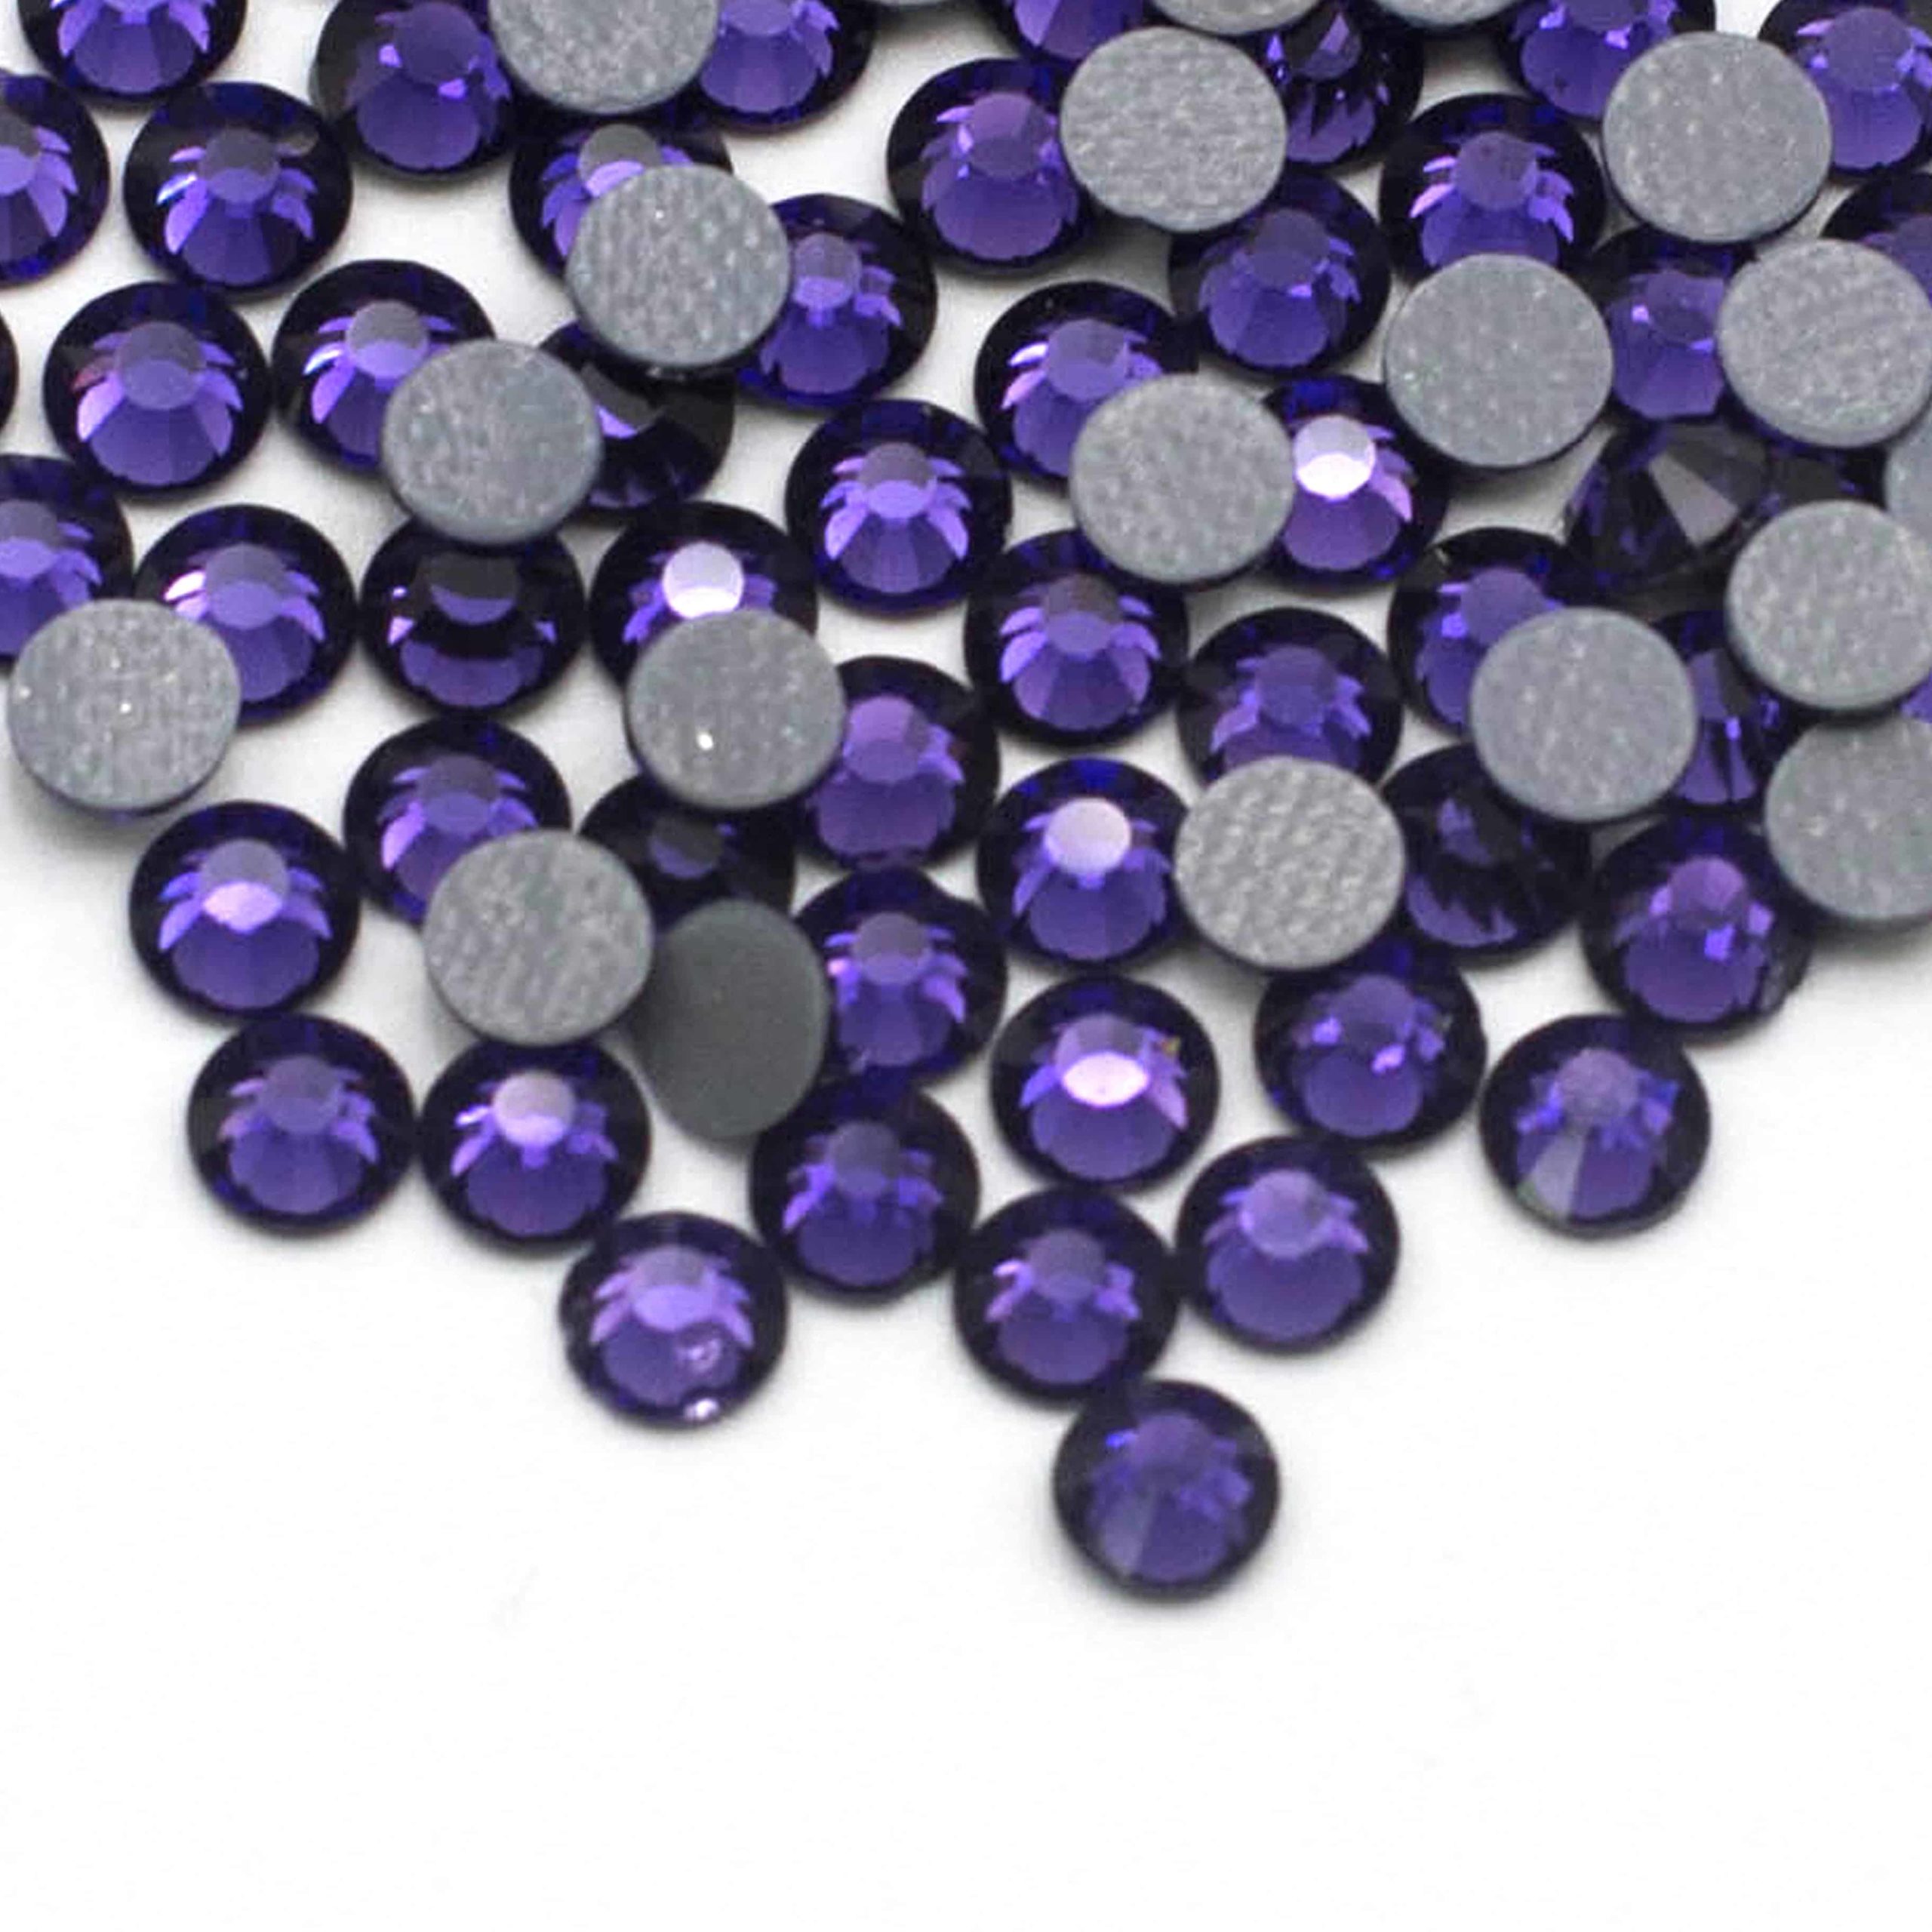 AB Purple RHINESTONES 2mm, 3mm, 4mm, 5mm, 6mm, flat back, ss6, ss10, ss16,  ss20, ss30, bulk, embellishments, faceted, #1229